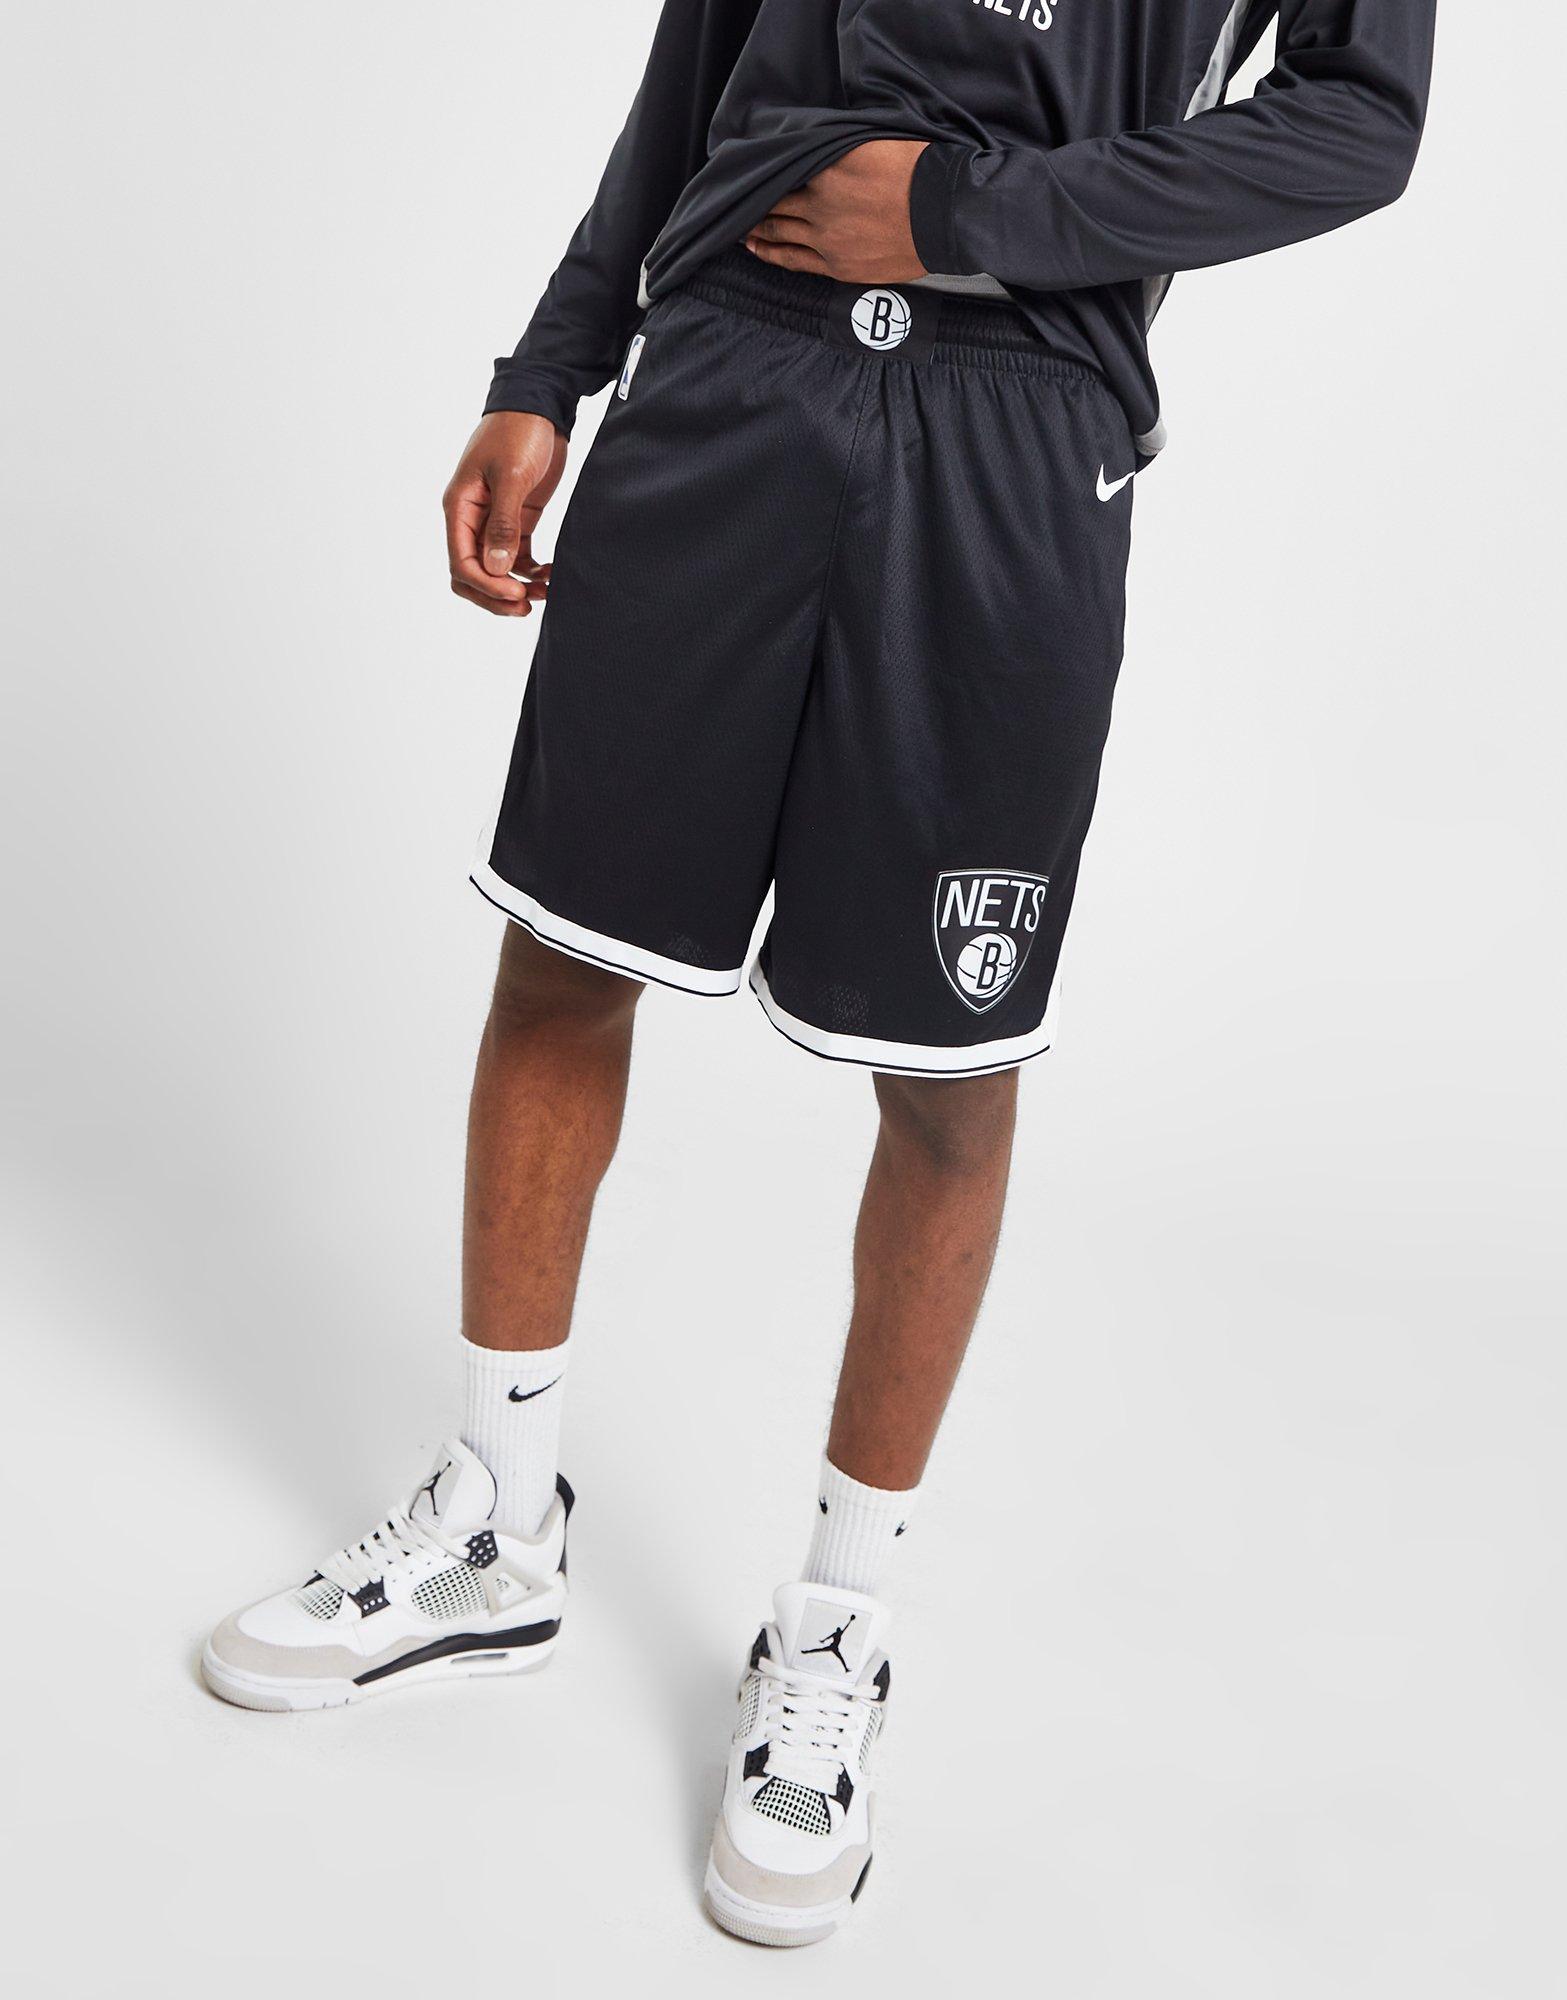 Brooklyn Nets Youth 8 Inseam Black NBA Replica Basketball Shorts By Adidas  on Sale